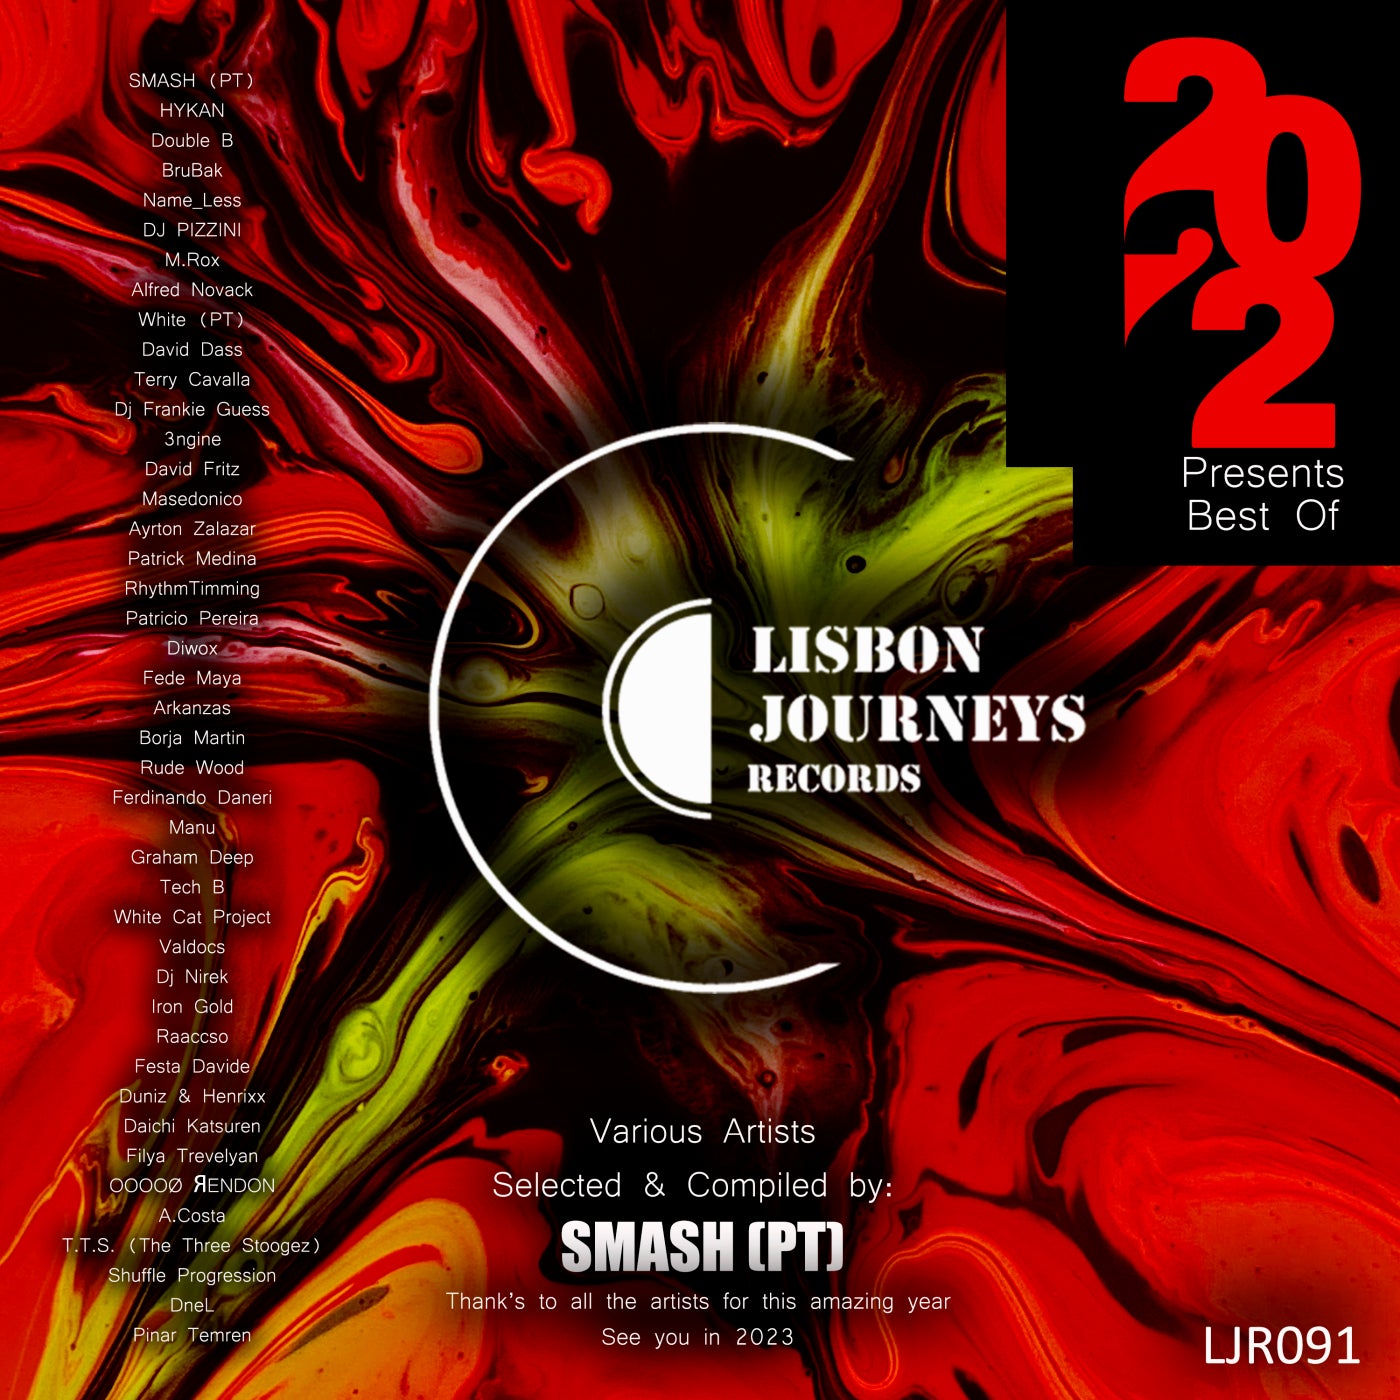 3ngine, Acosta - Lisbon Journeys Records Presents Best of 2022 V.A. (Selected & Compiled by SMASH (PT)) [Lisbon Journeys Records]